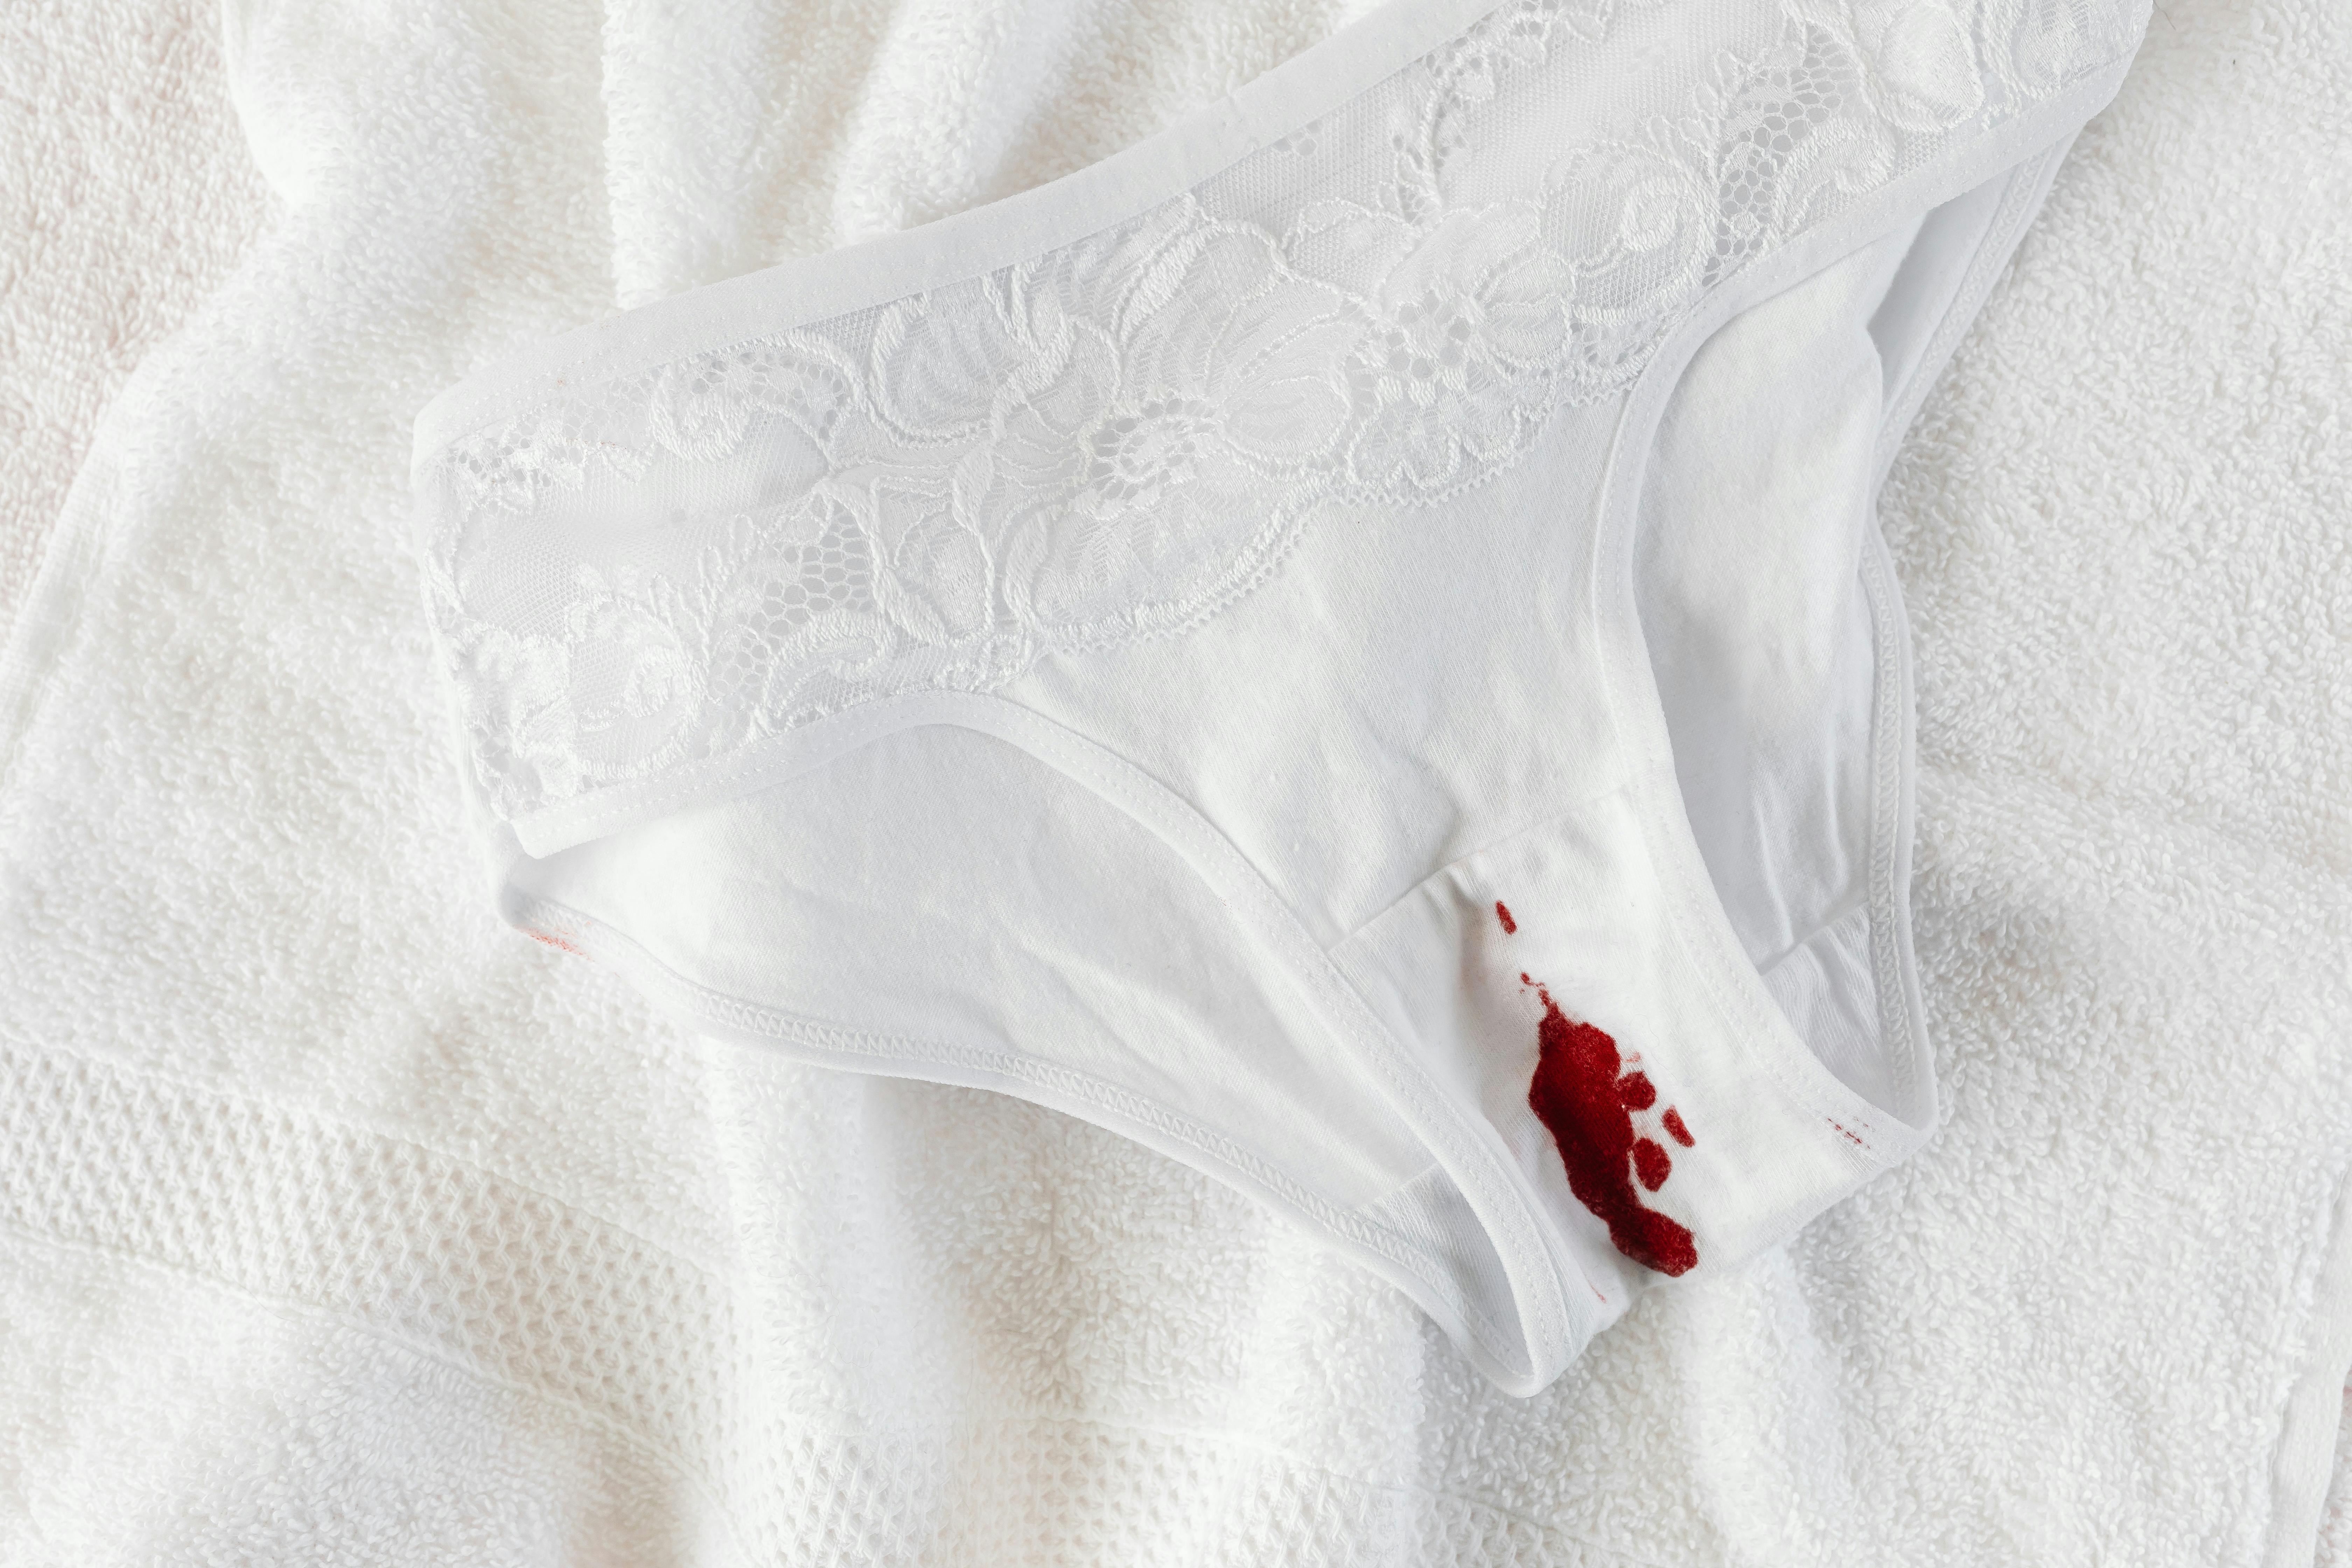 White Panties Bloody Image & Photo (Free Trial)